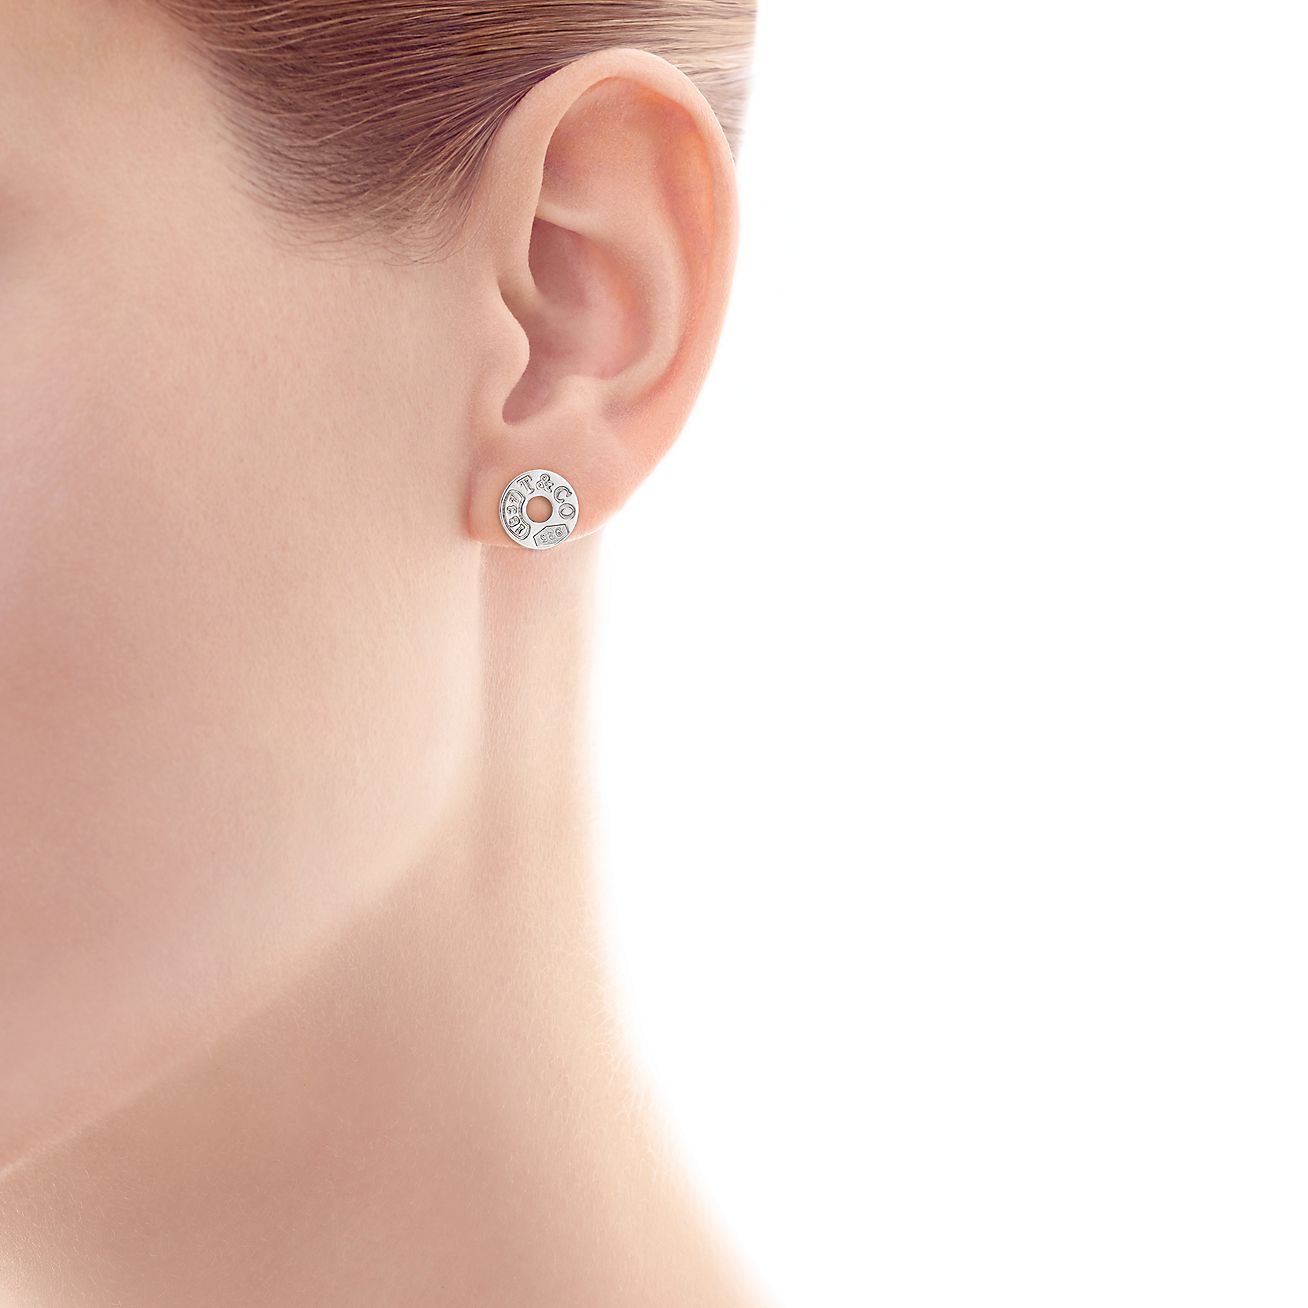 Tiffany 1837® circle earrings in 